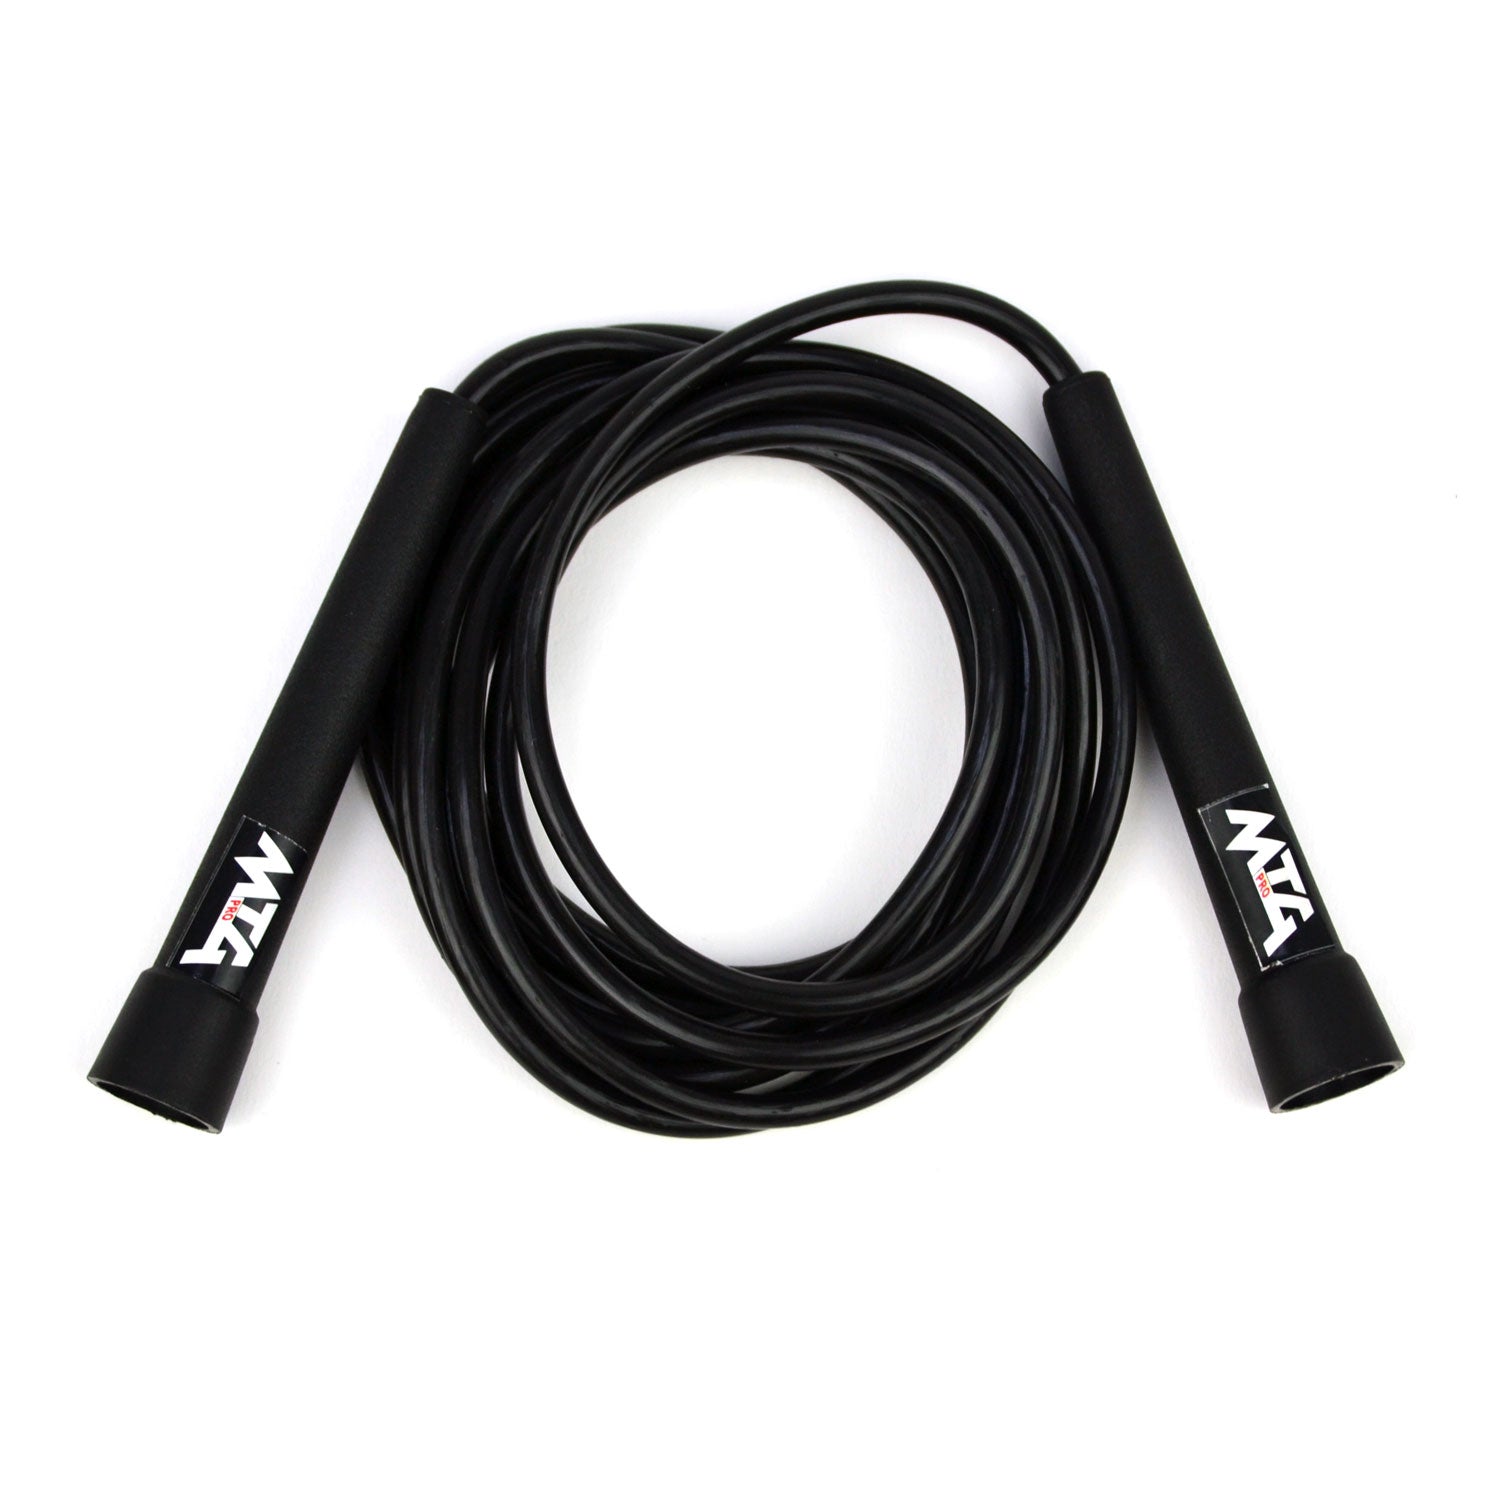 SR3 MTG Pro Lightweight Speed Rope Black